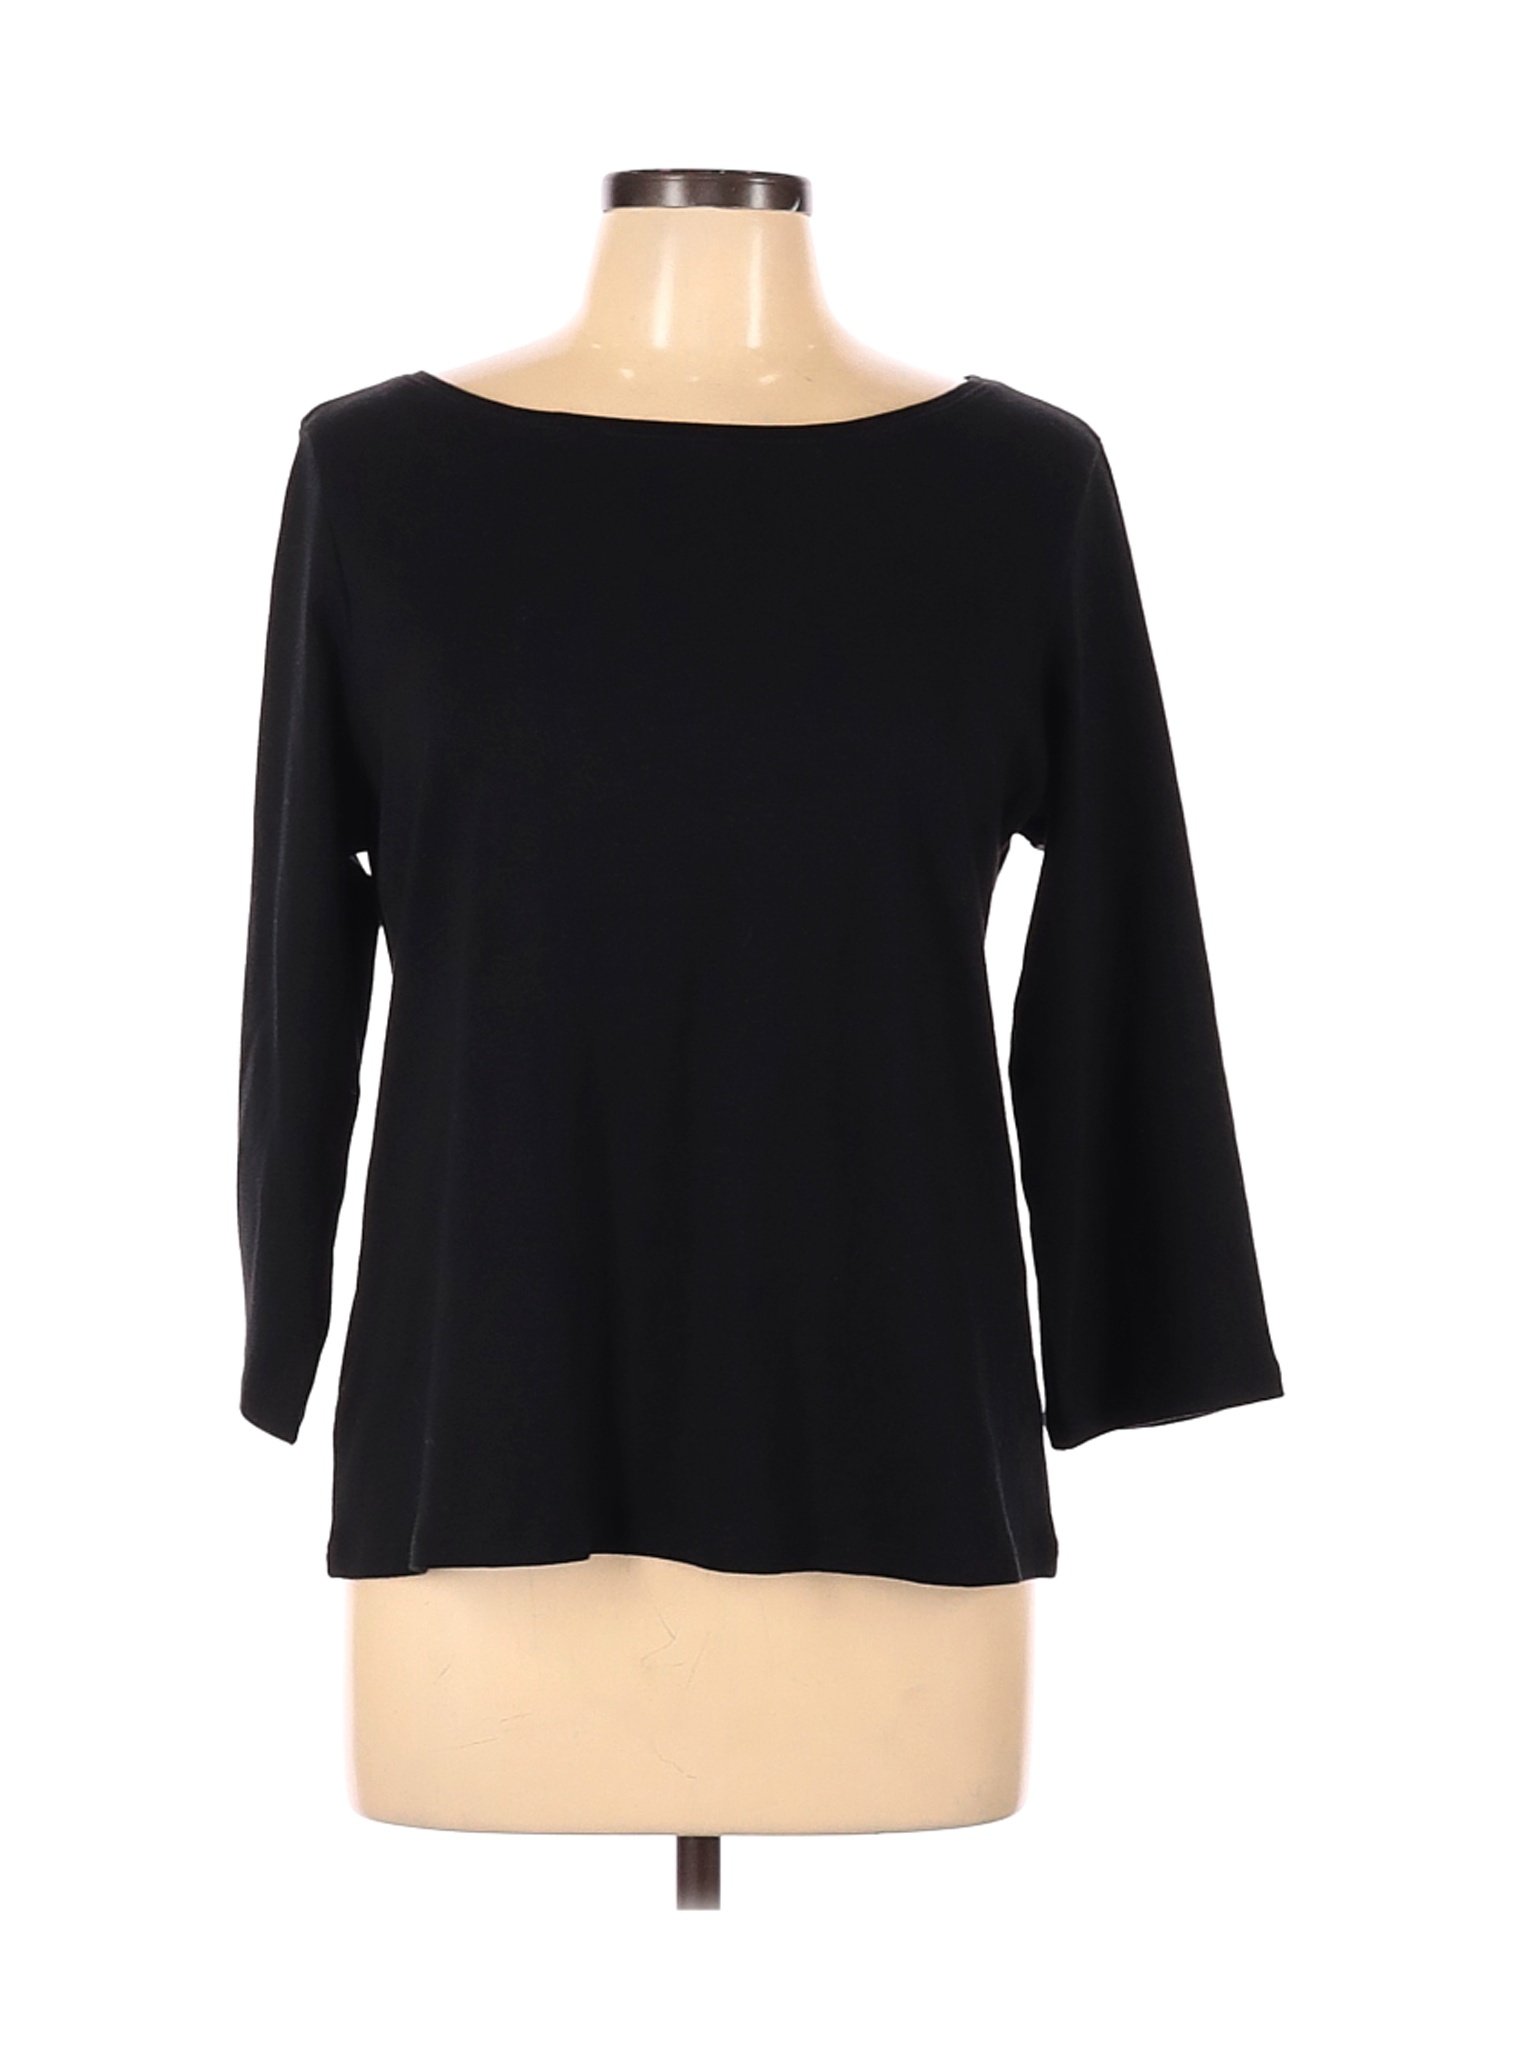 Eileen Fisher Women Black 3/4 Sleeve T-Shirt L | eBay